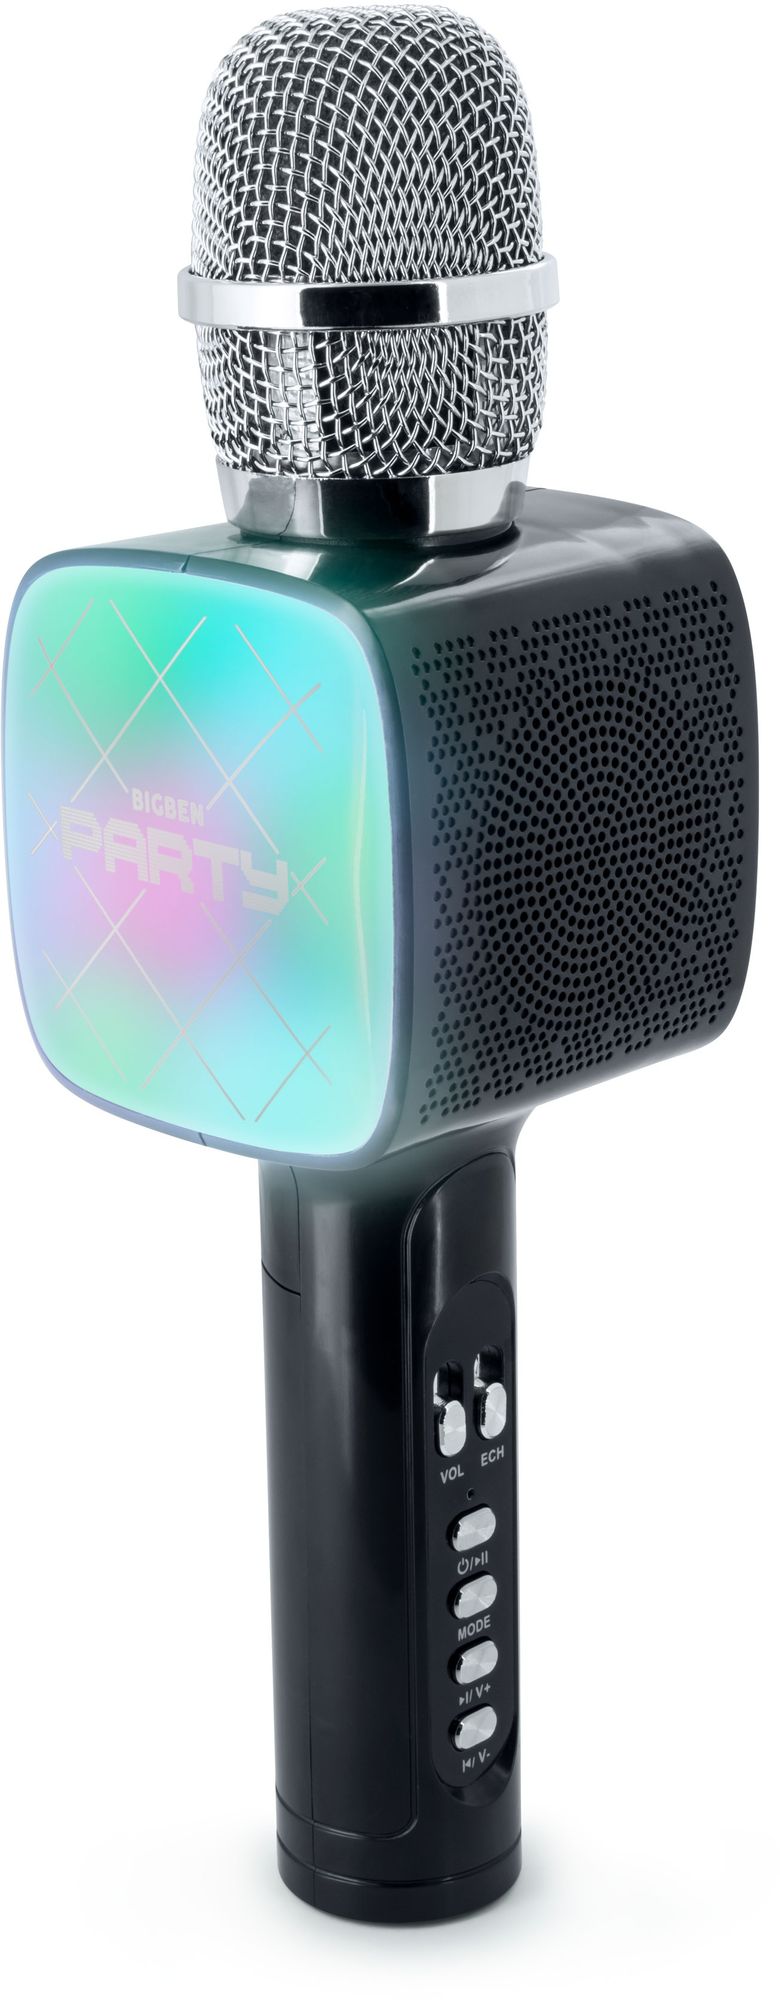 Speaker Wireless - bestellen with - - Light black BTMIC Microphone + Bigben online Effects PARTY